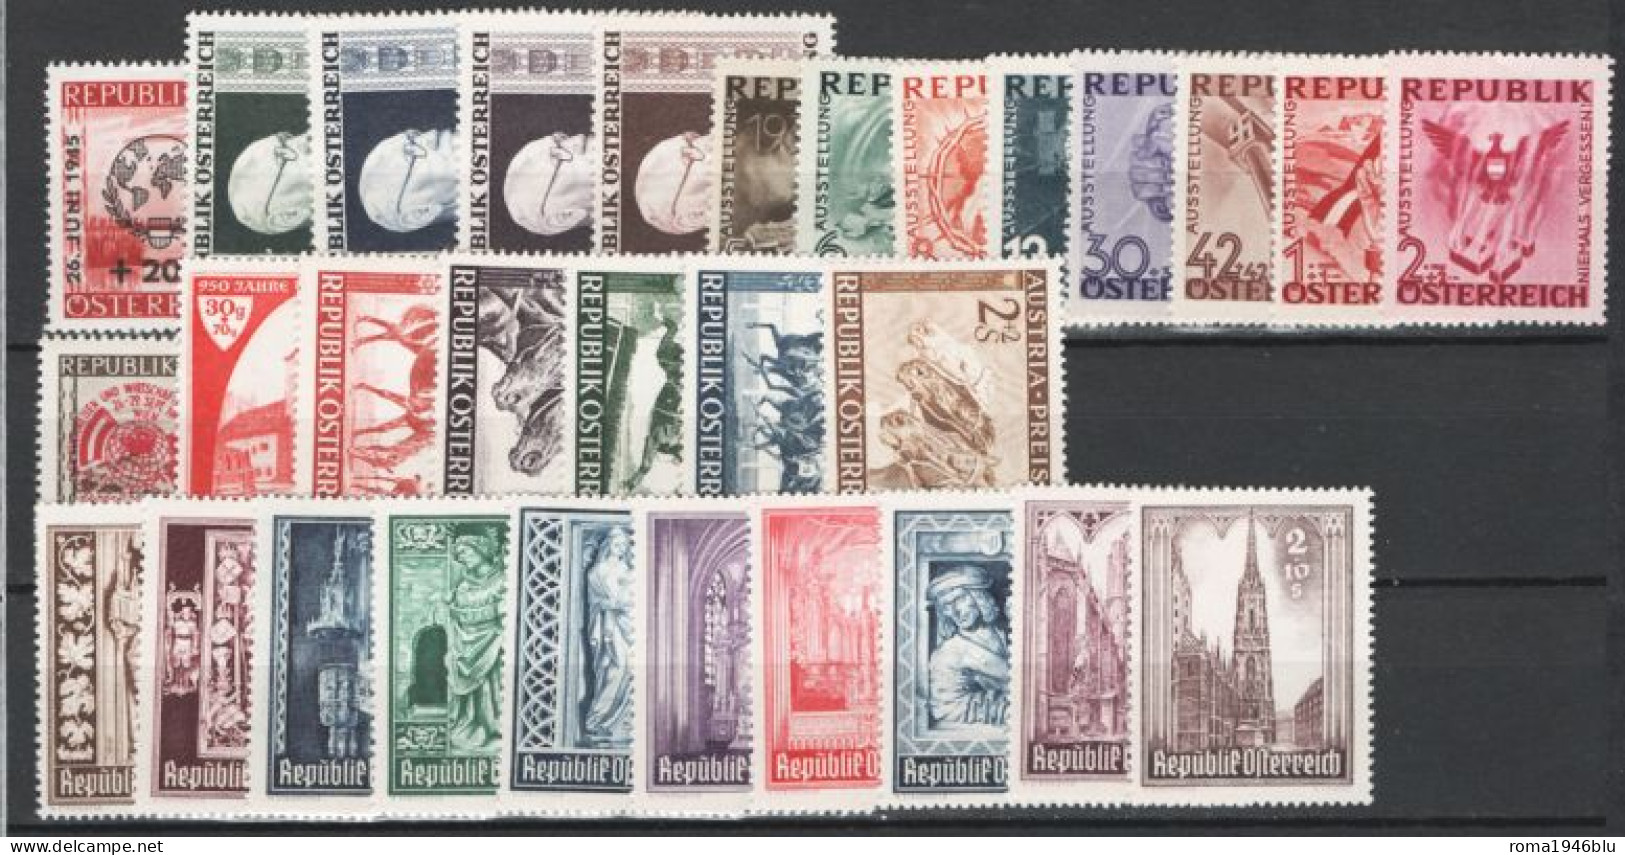 Austria 1946 Annata Completa / Complete Year Set **/MNH VF - Años Completos